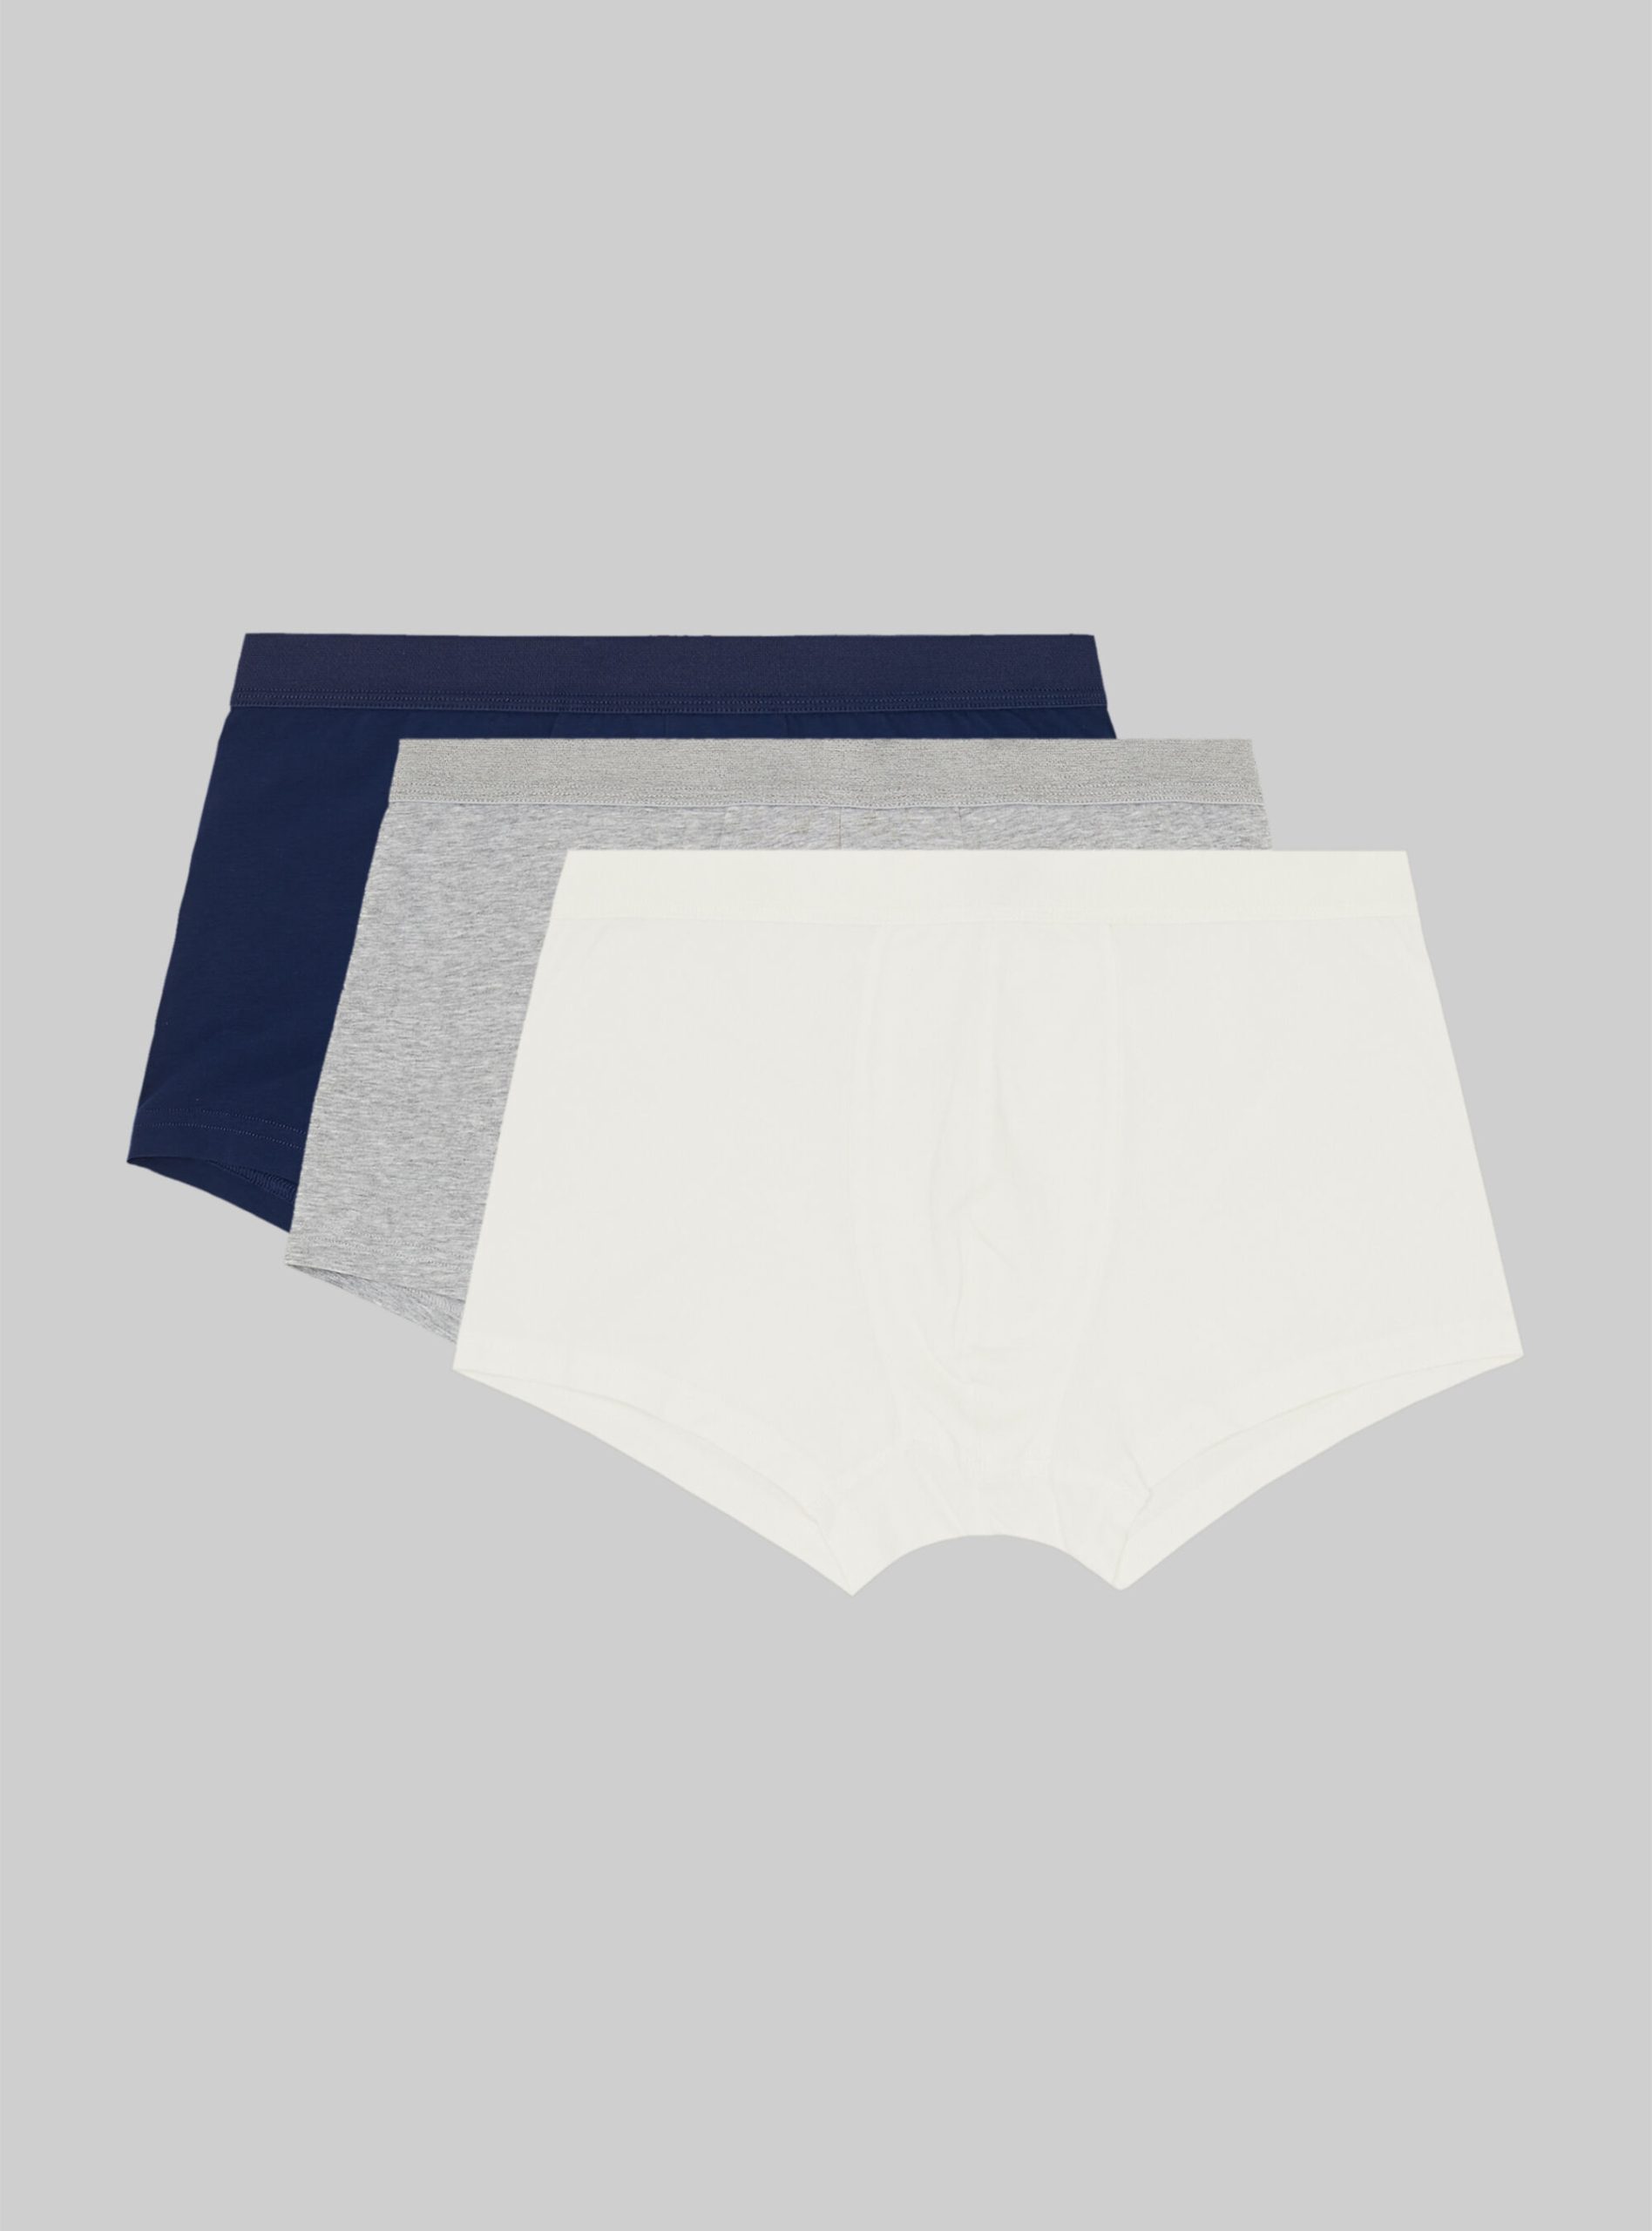 Alcott Vertrieb Mgy2/Na2/Wh2 Männer Set Of 3 Pairs Of Stretch Cotton Boxer Shorts Unterwäsche – 1